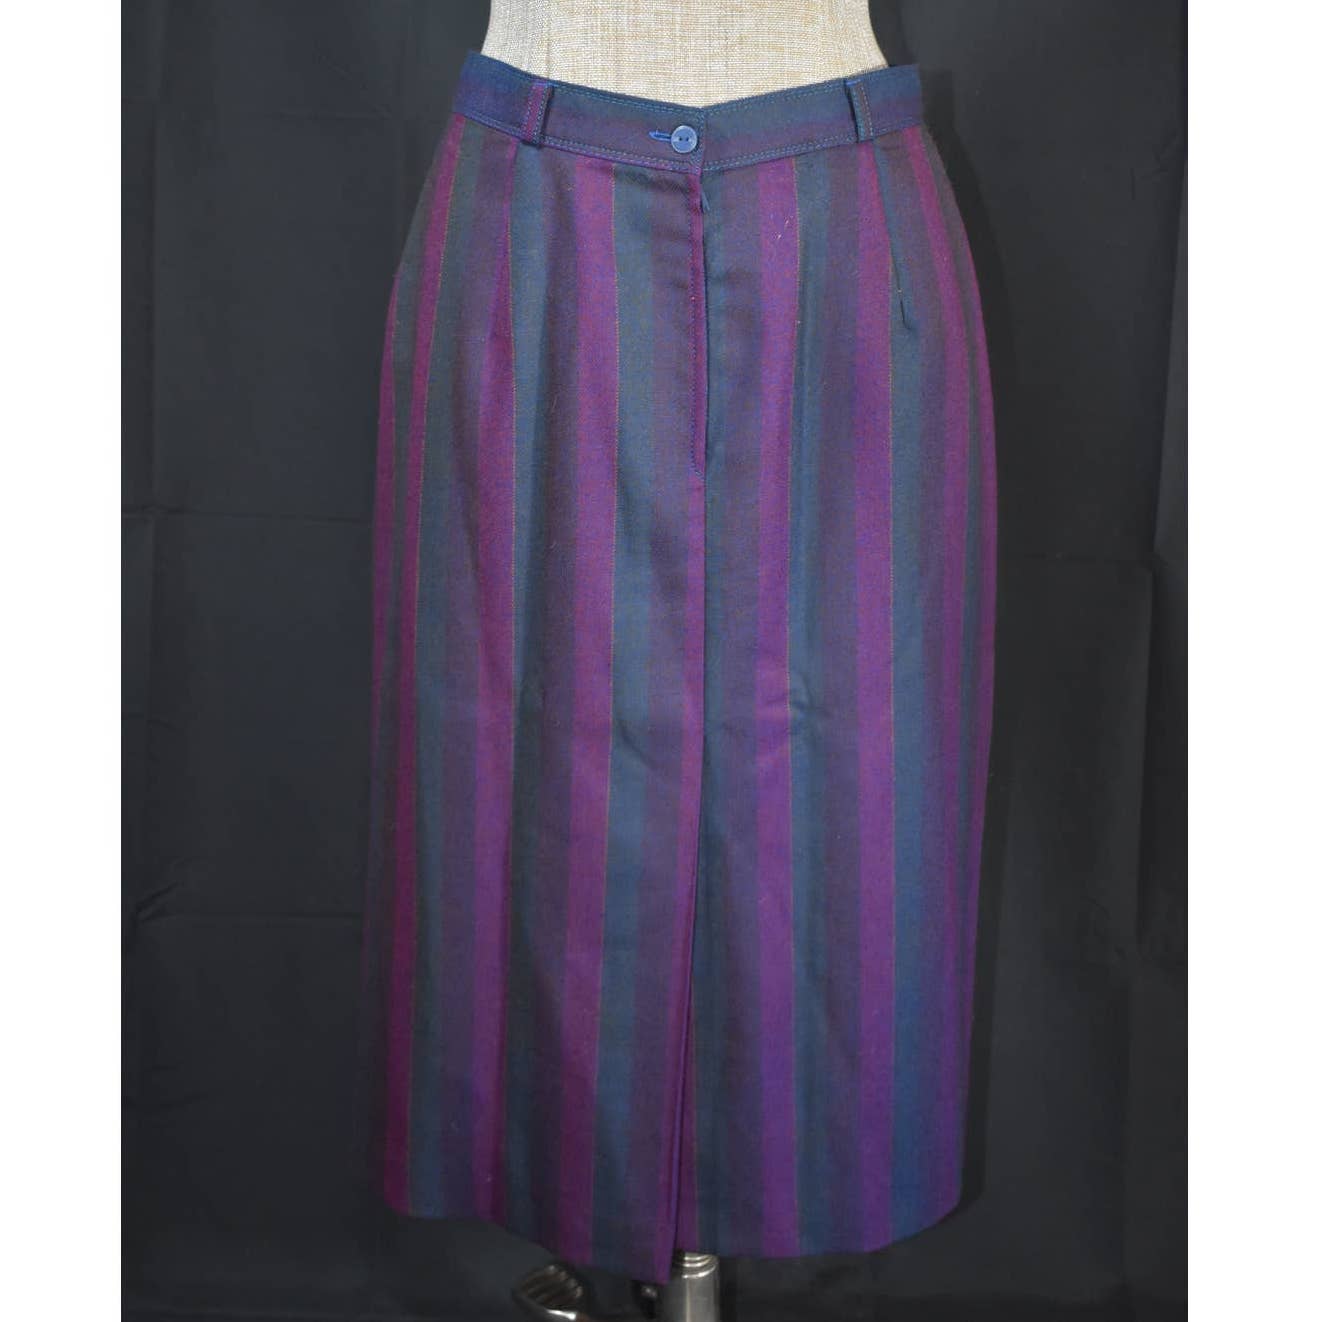 Vintage 100% Wool Purple and Blue Striped Skirt- 46